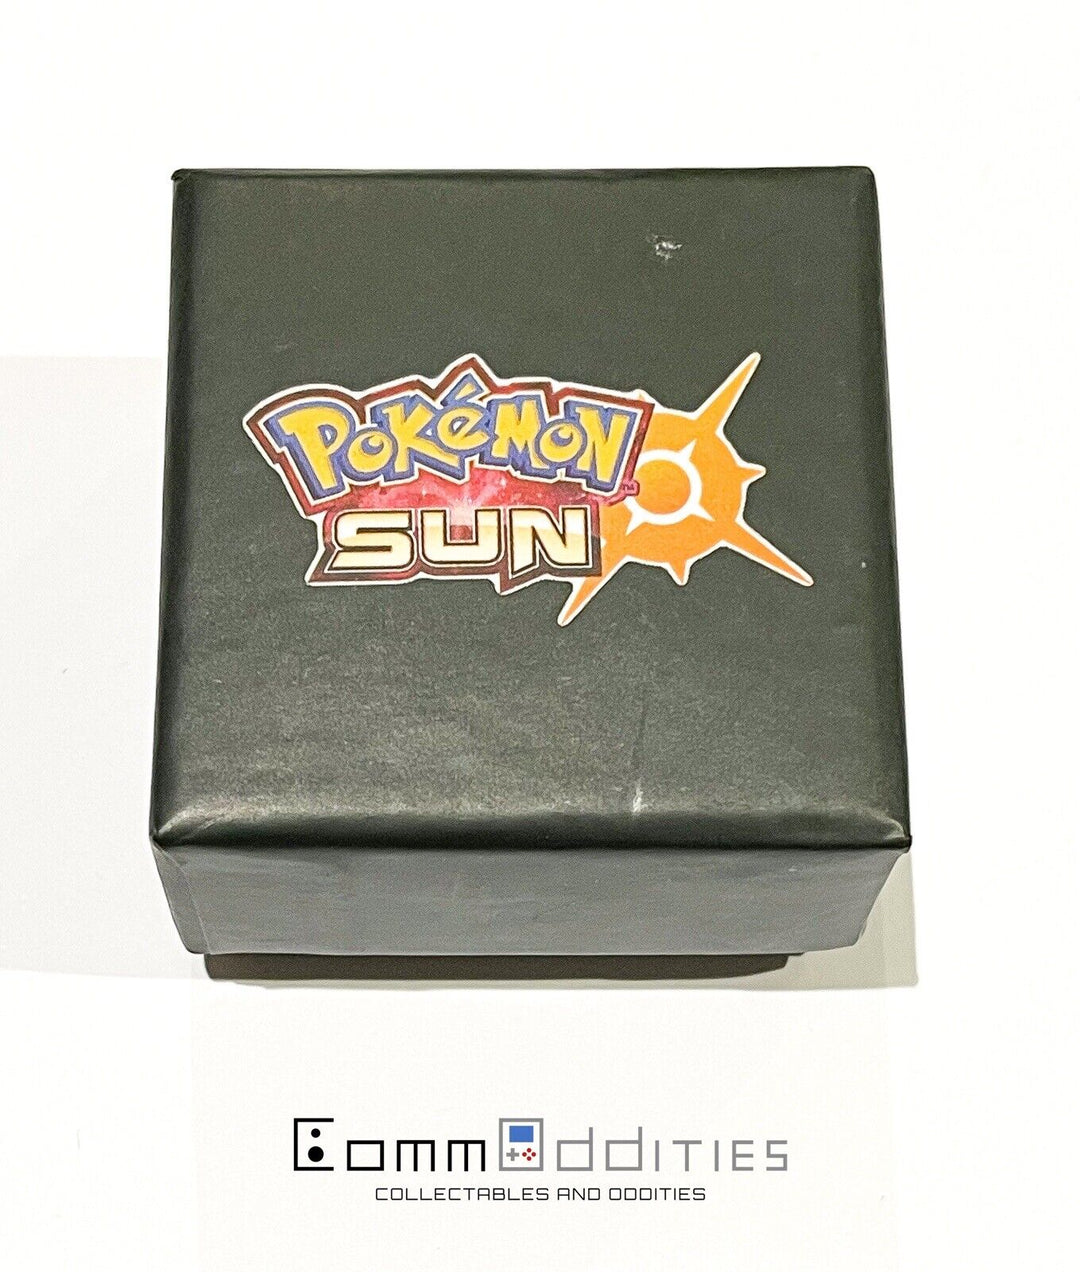 Pokémon Sun And Moon Fan Edition Collectors Badge Pin Toy - Sun Edition Pin